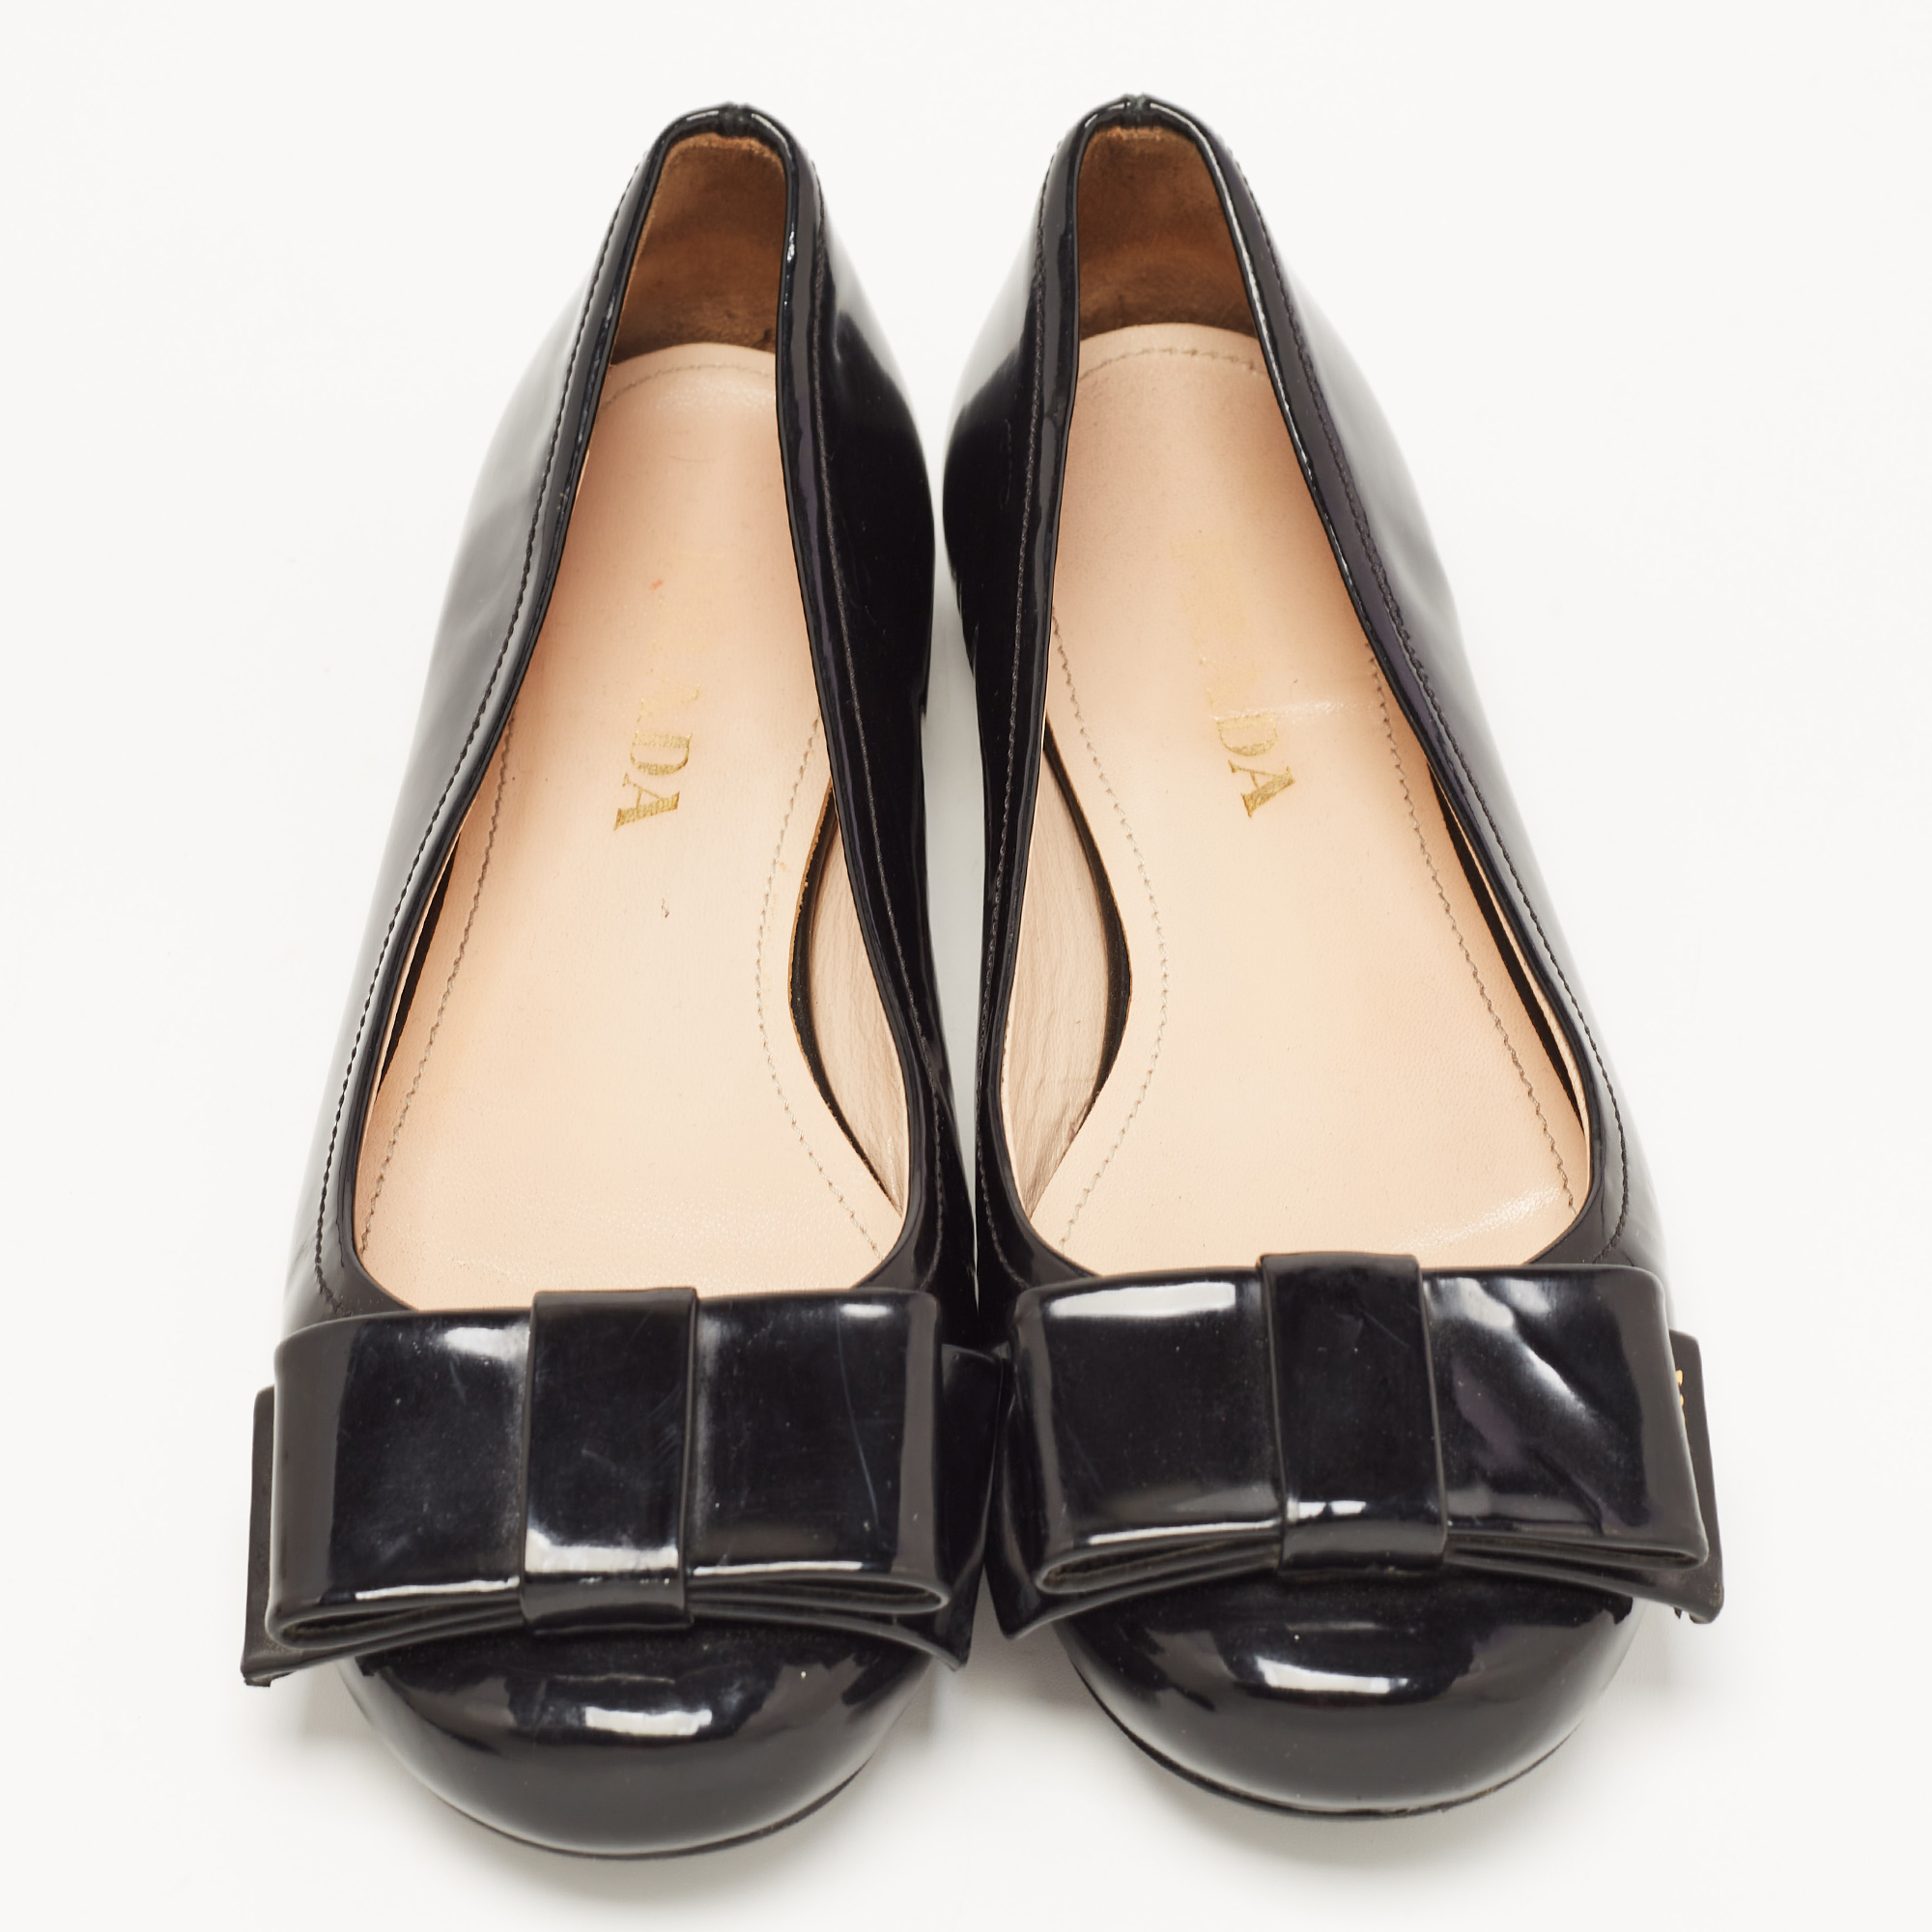 Prada Black Patent Leather Bow Ballet Flats Size 35